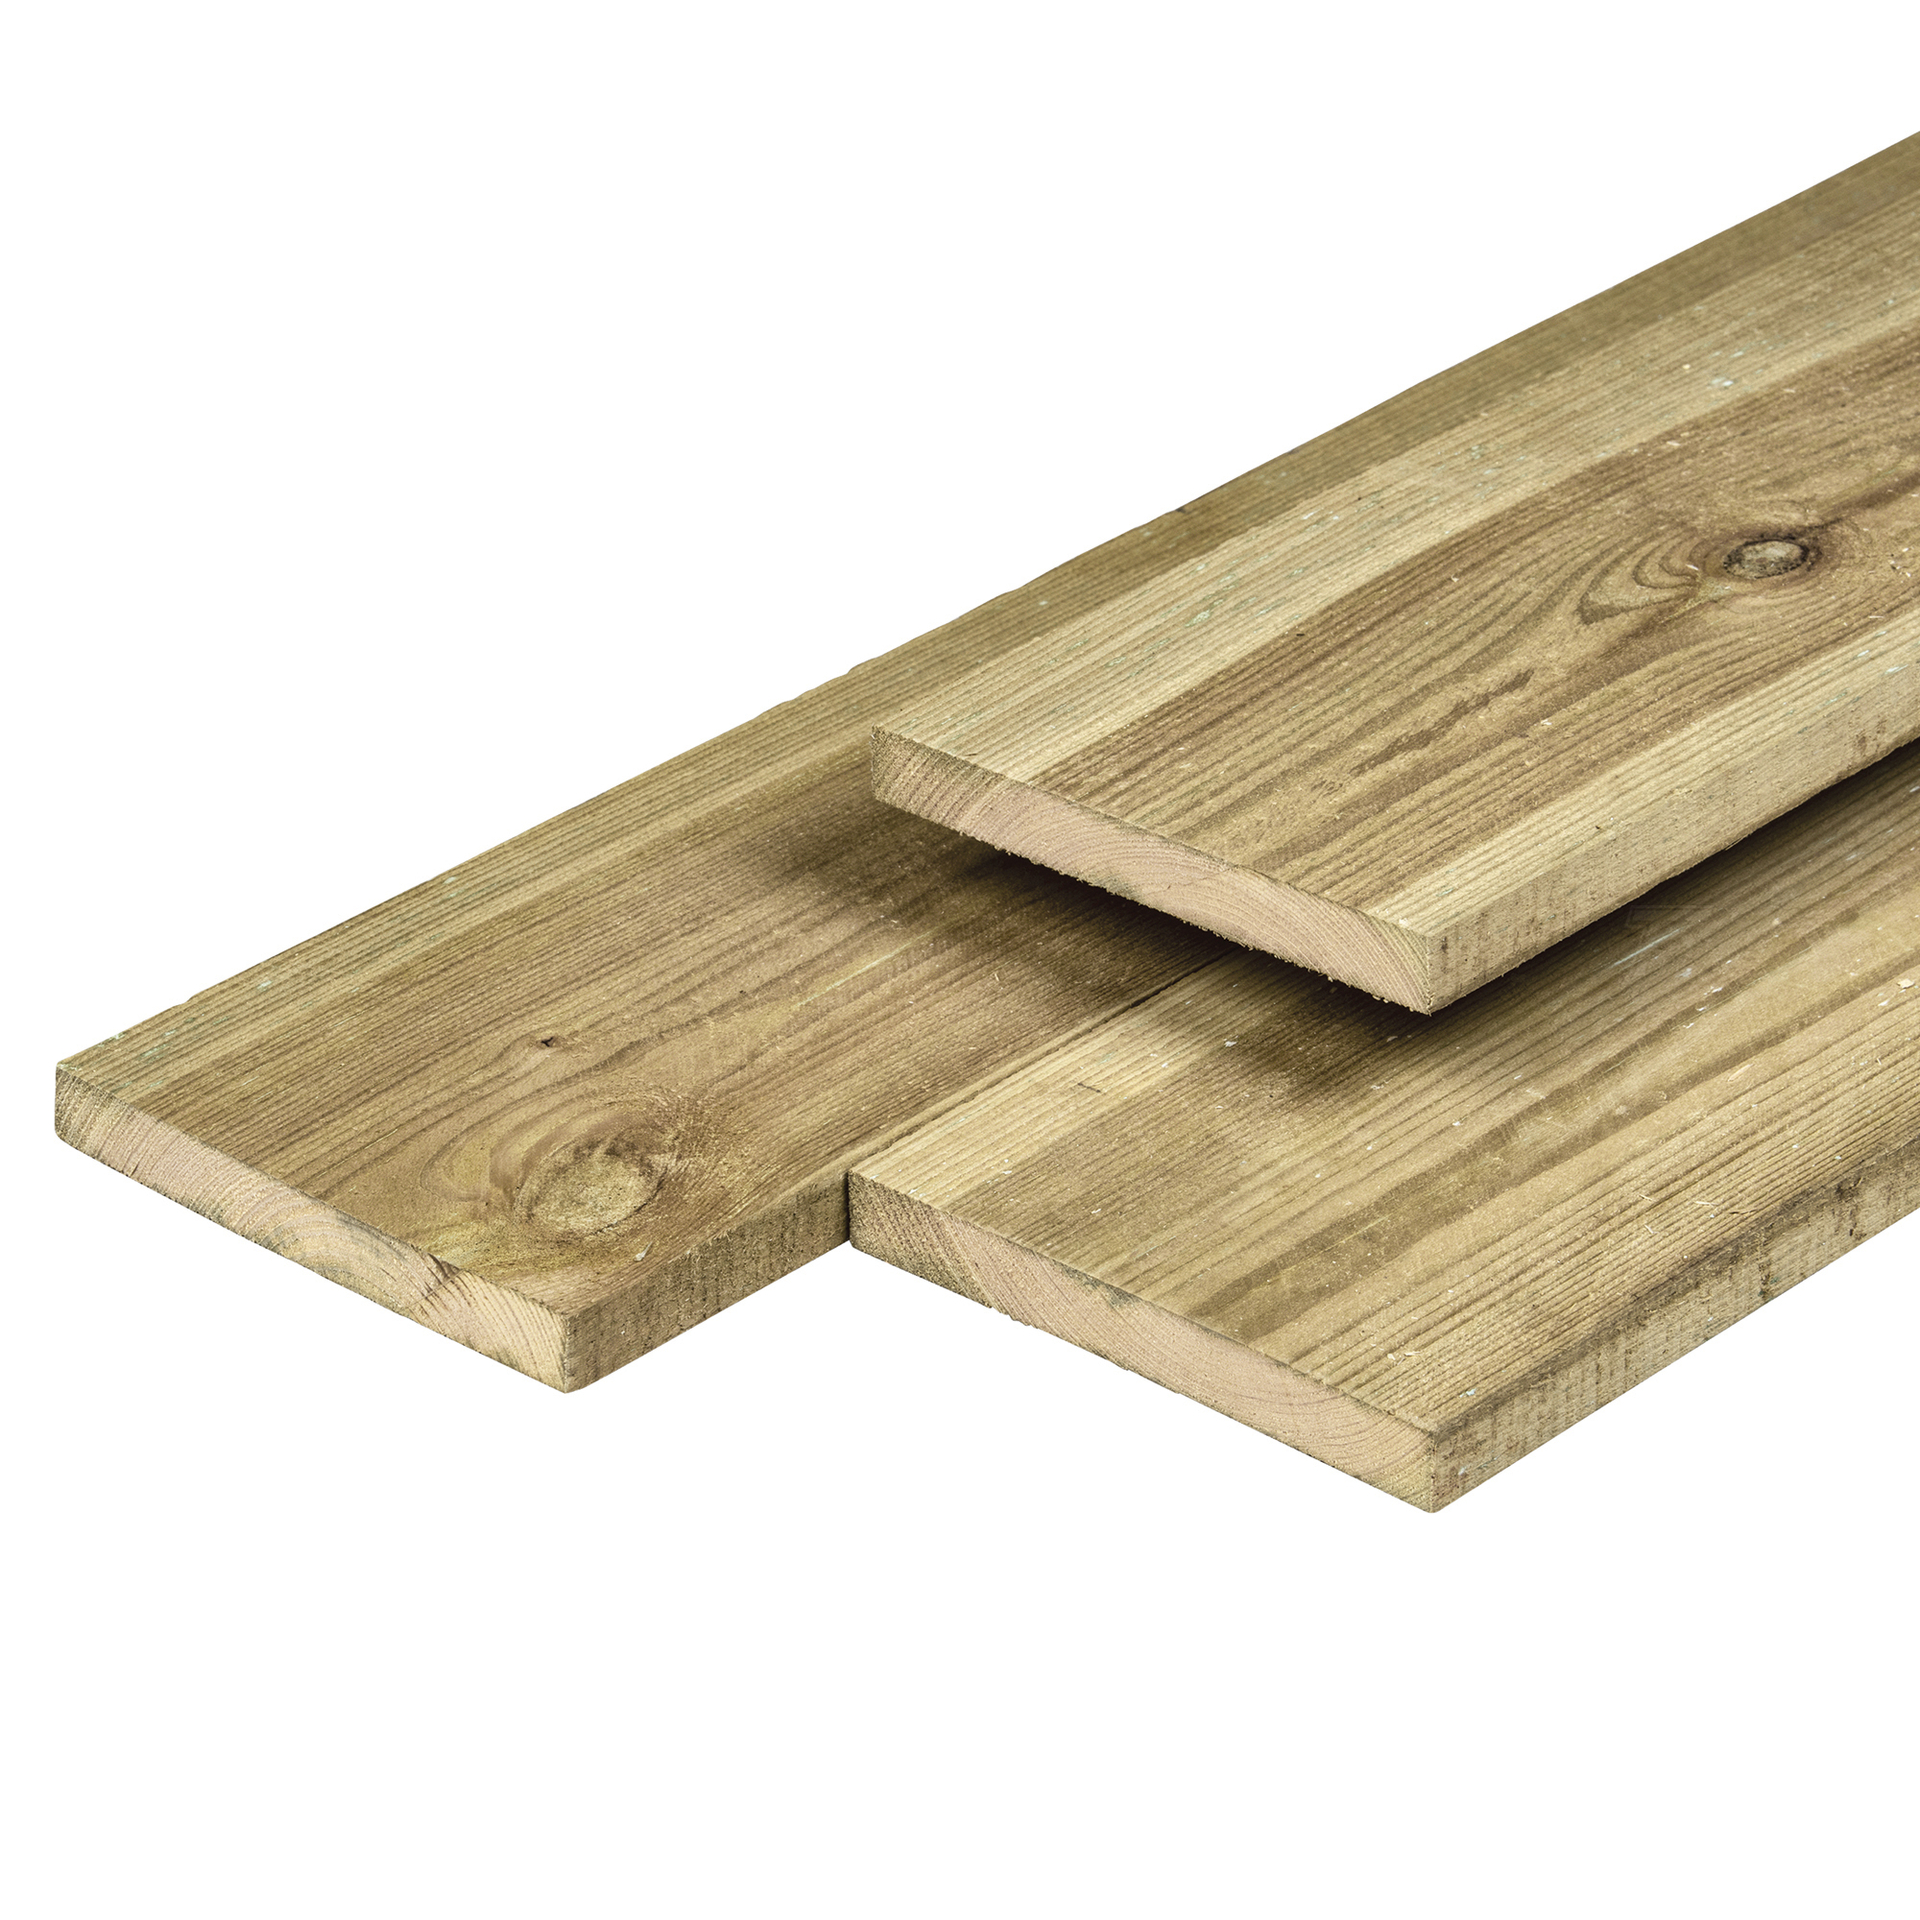 Plank Midden-Europees grenen 1.6x14.0x310cm